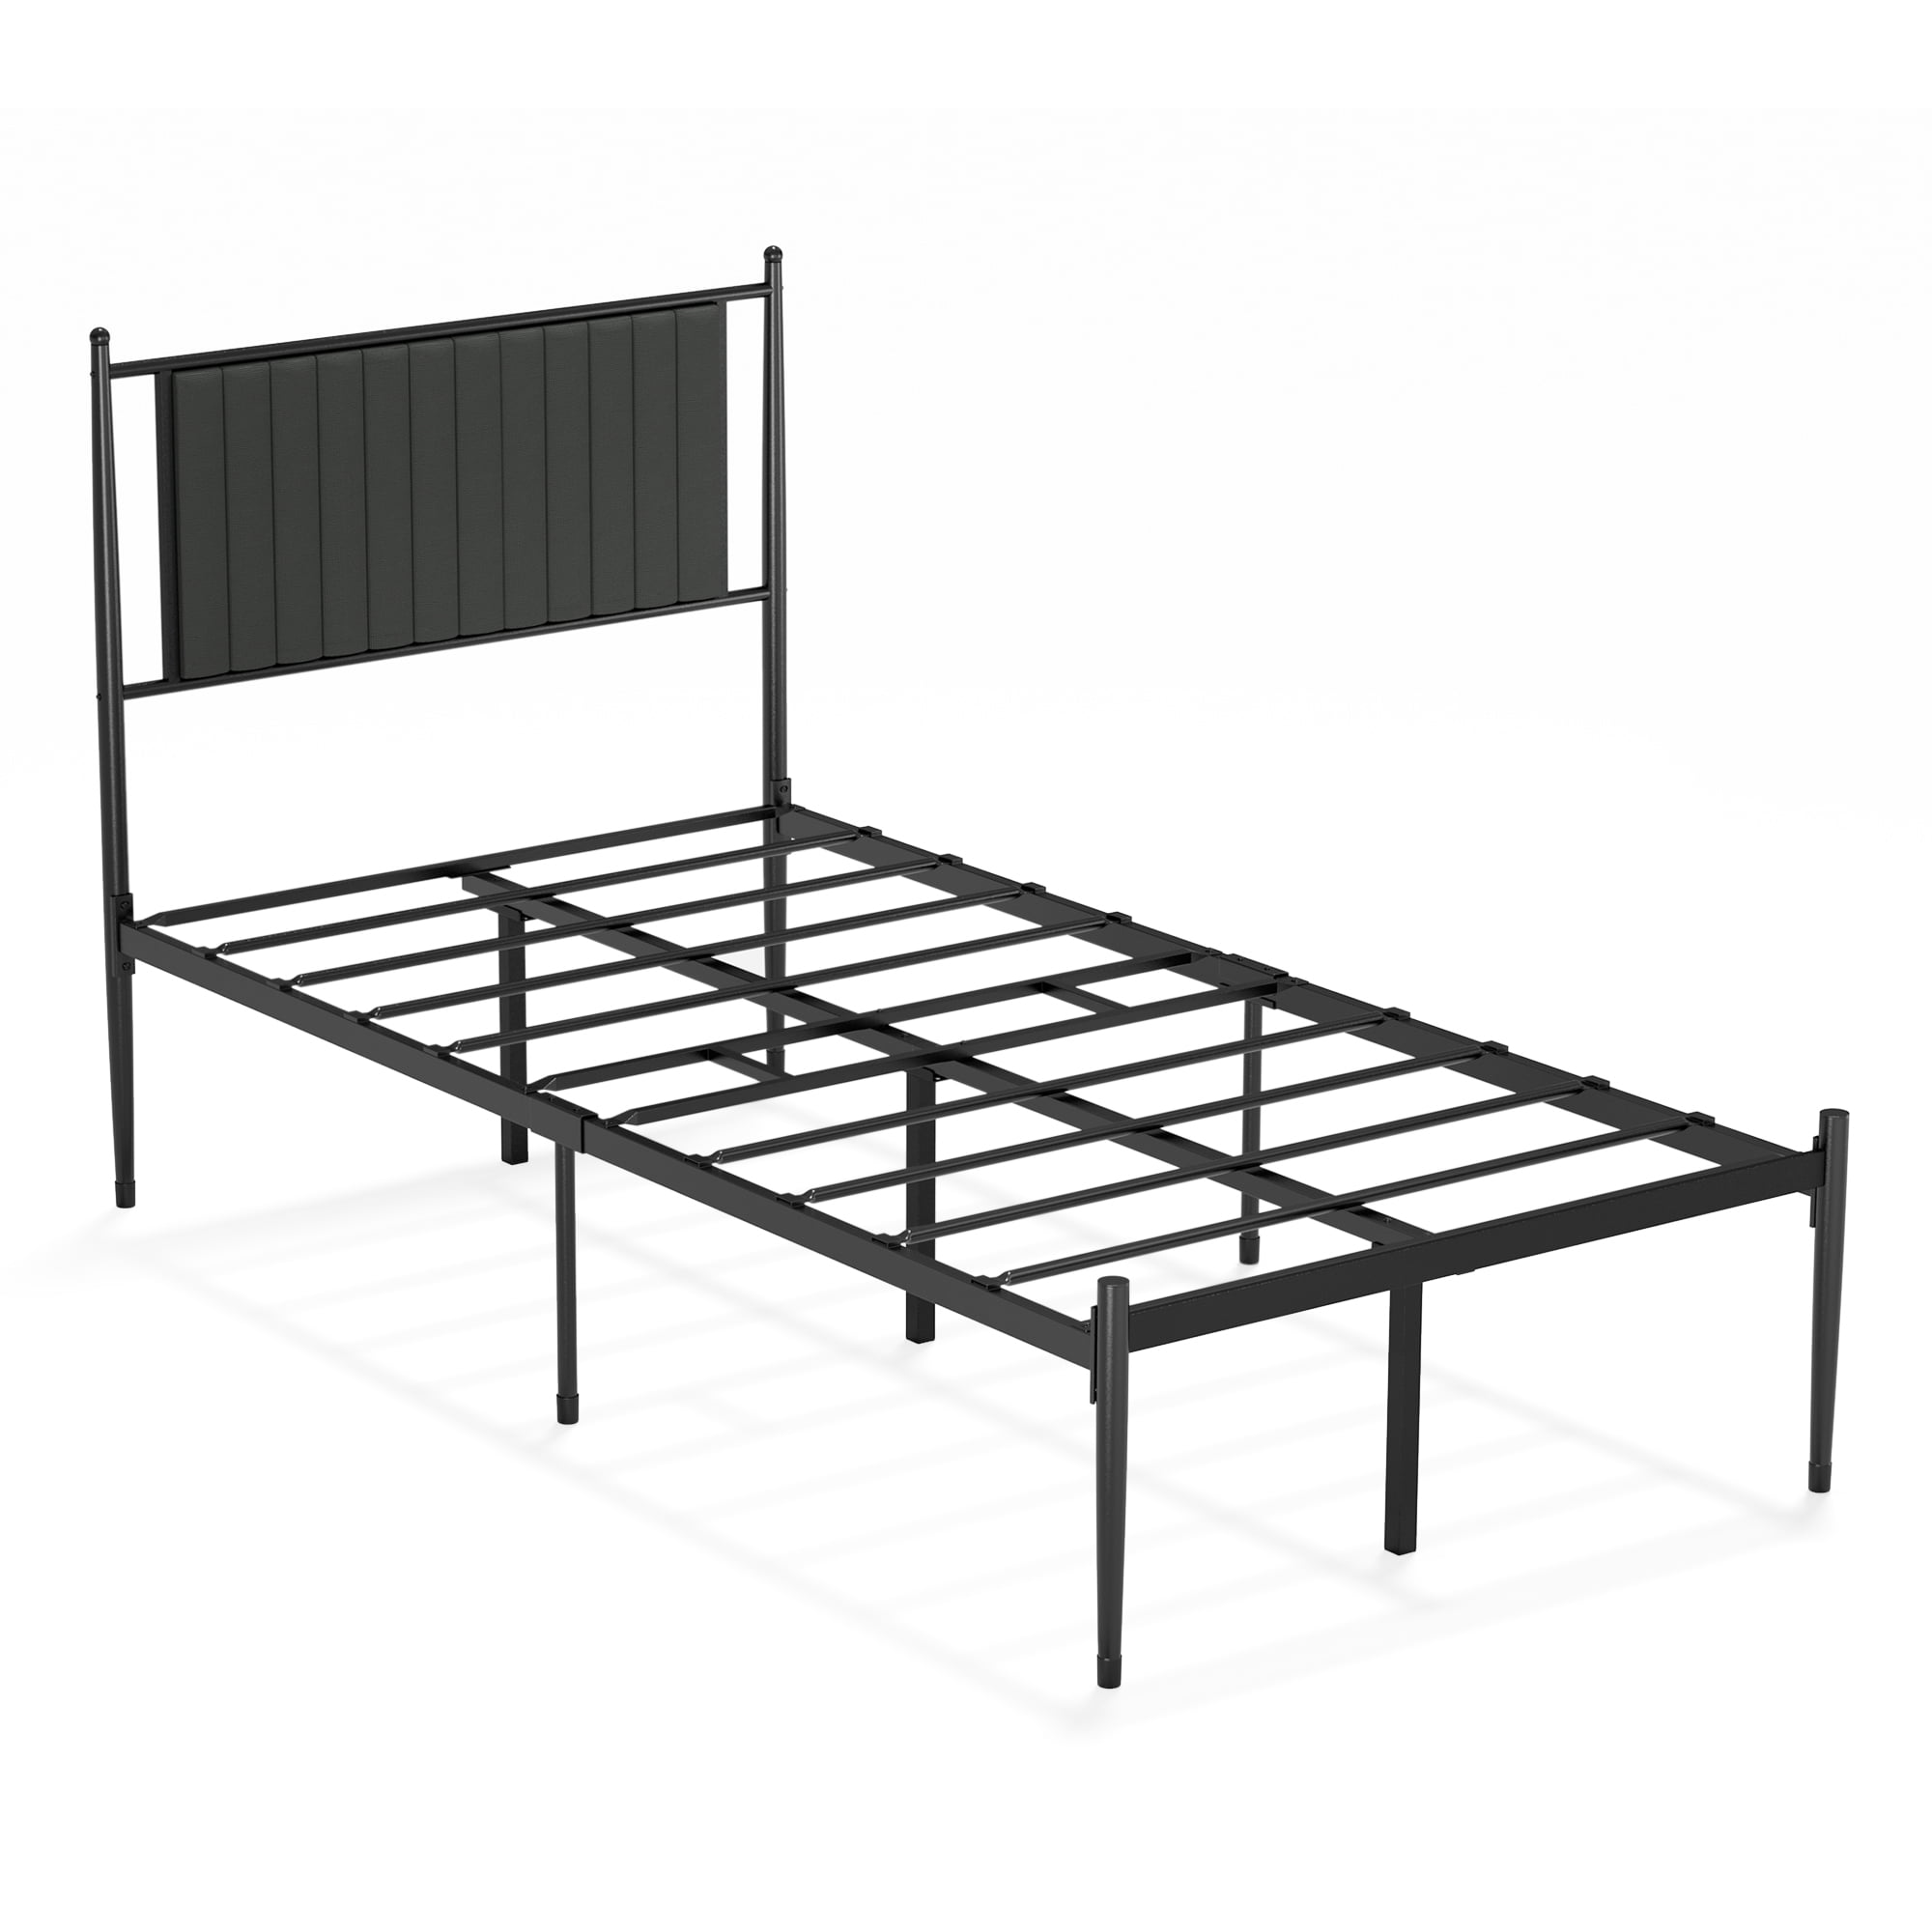 Details about   14 Inch Metal Platform Bed Frame with Steel Slat Support Mattress Foundation 